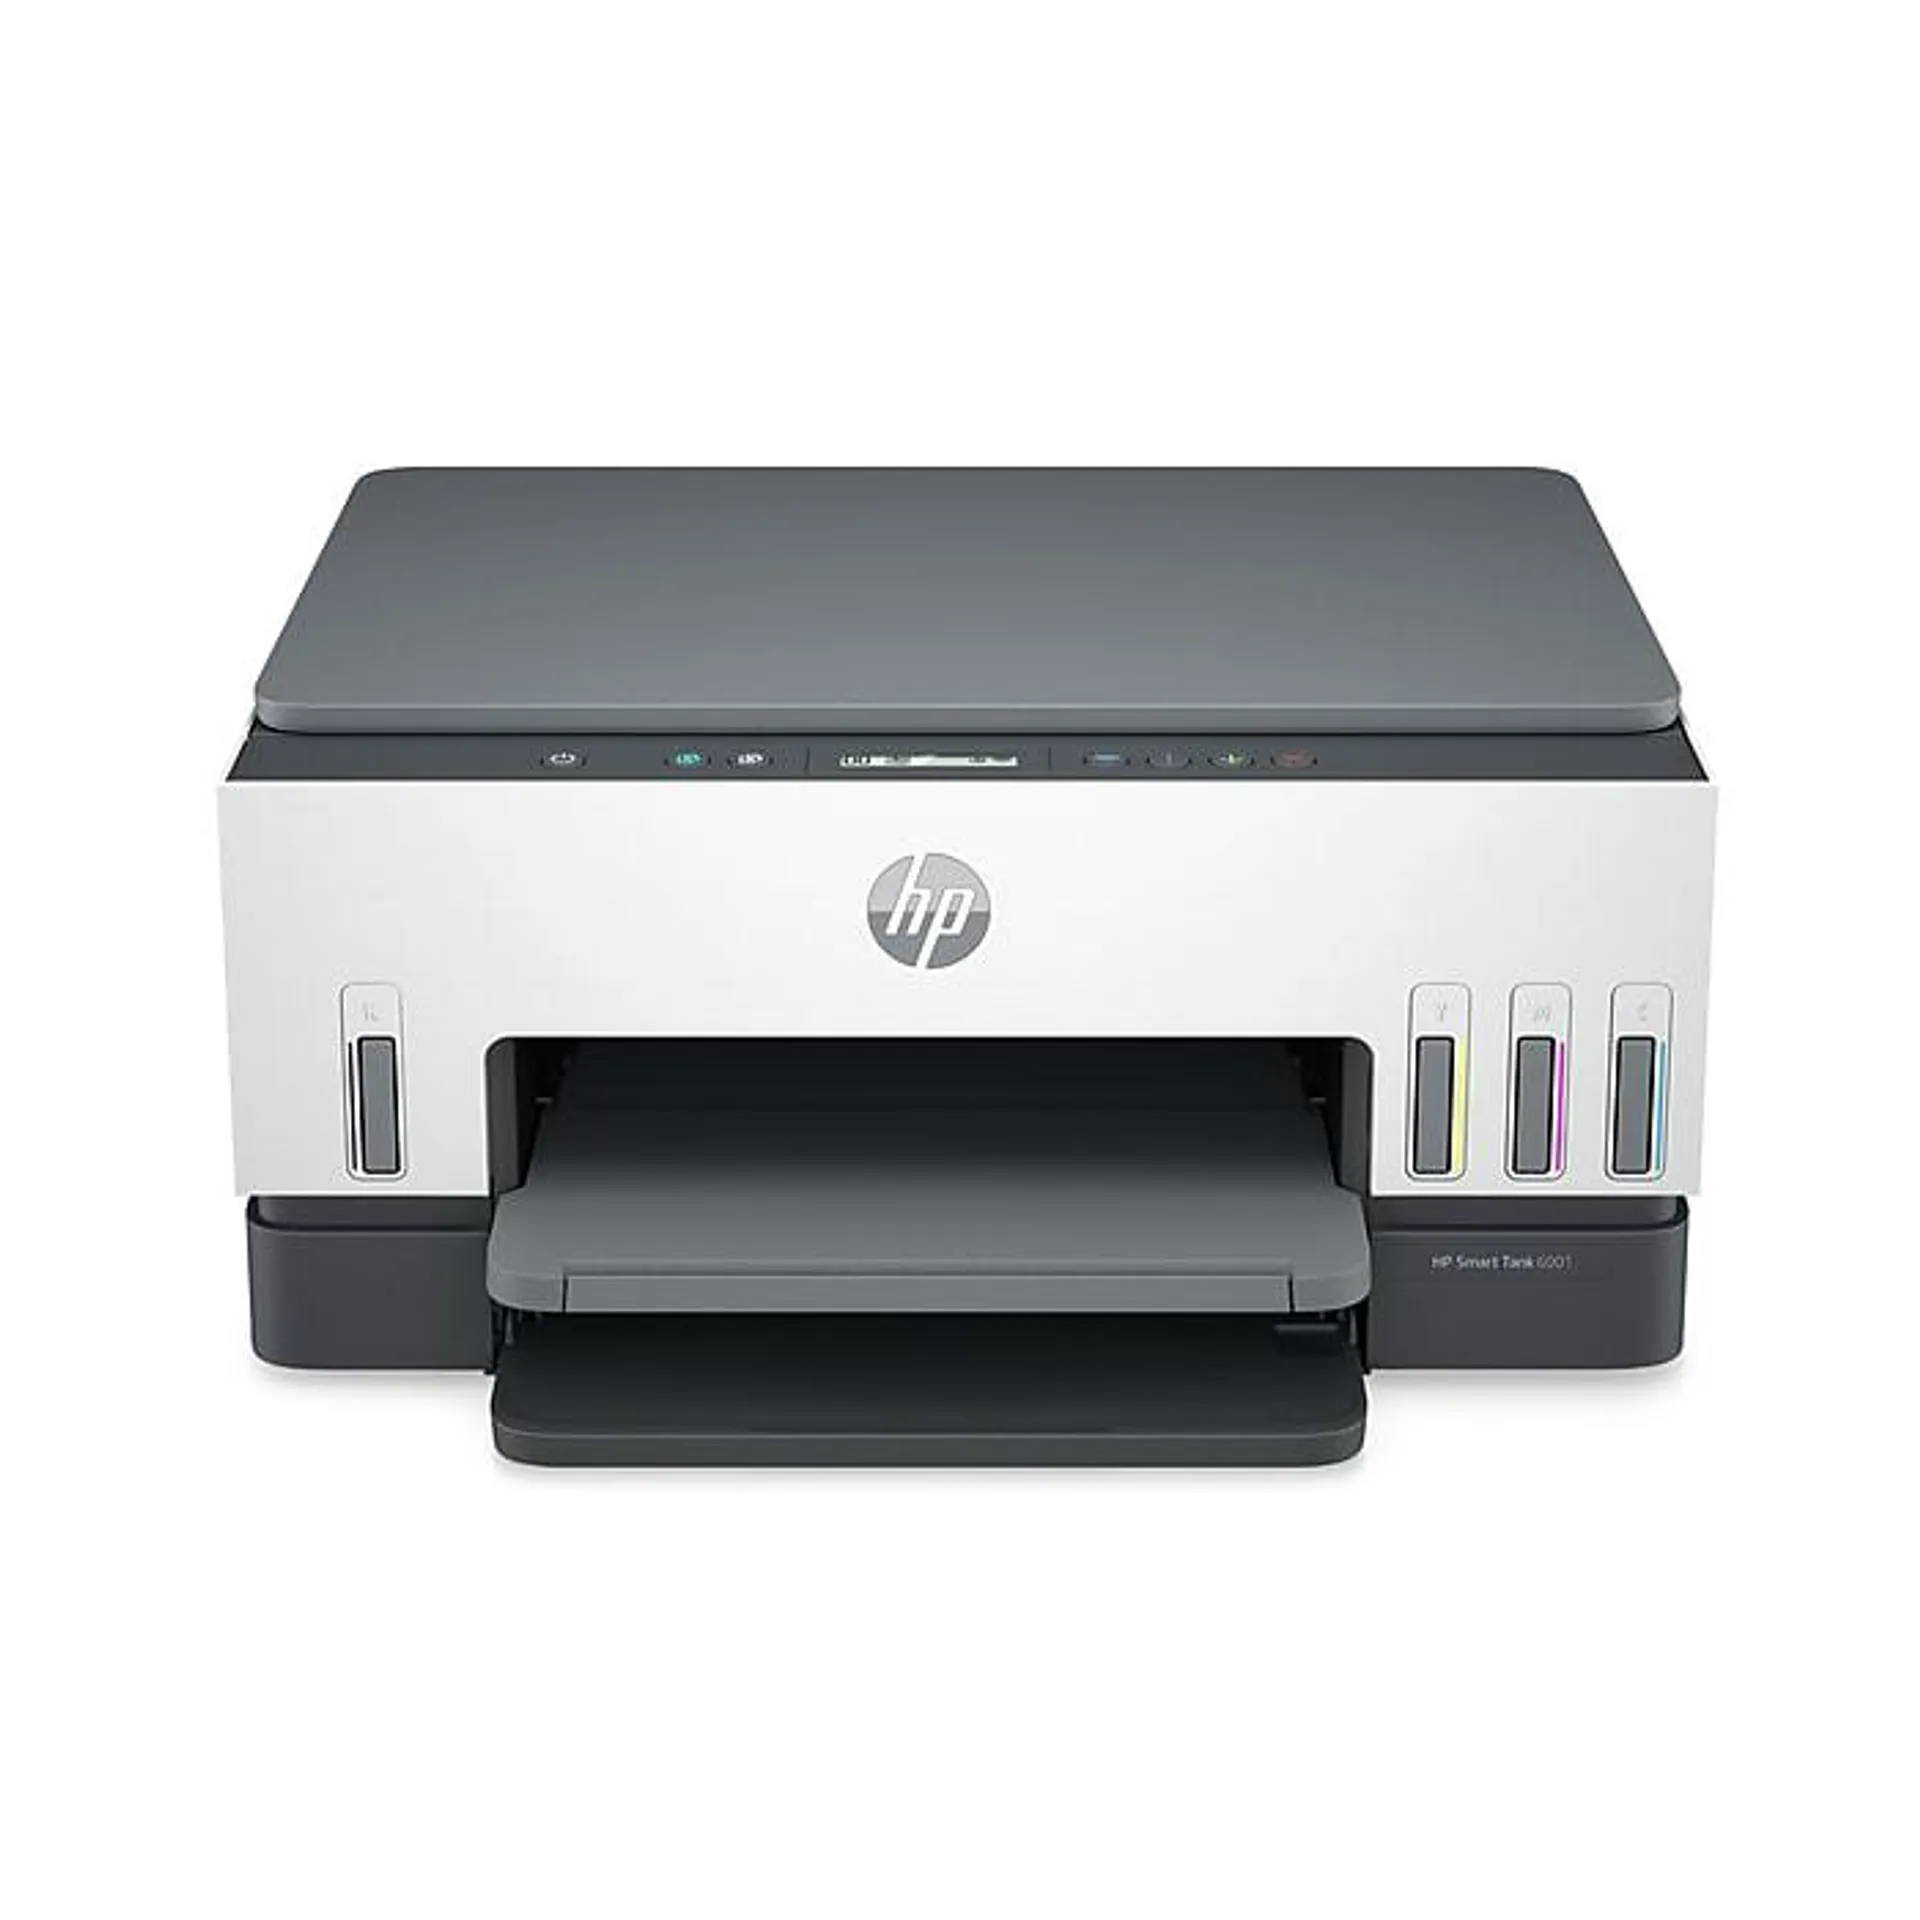 HP Smart Tank 6001 Inkjet Printer,